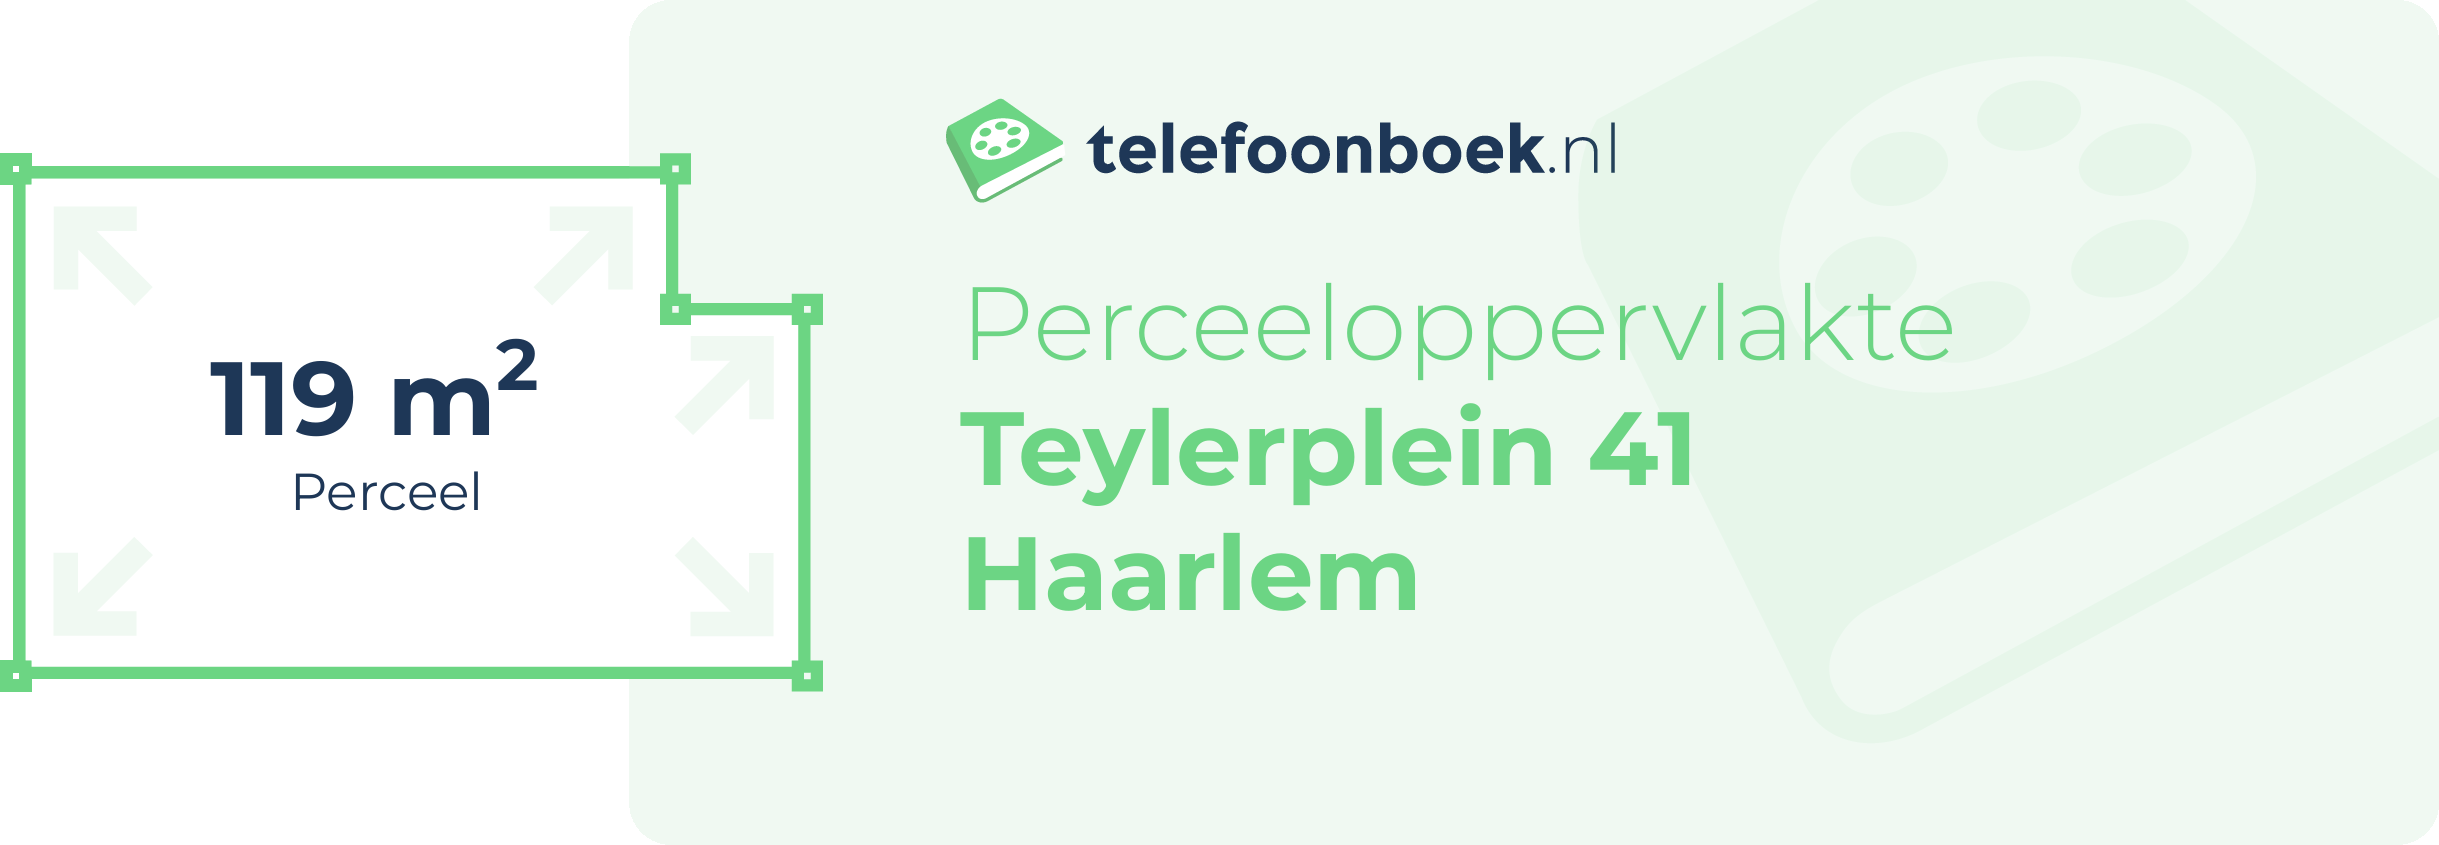 Perceeloppervlakte Teylerplein 41 Haarlem